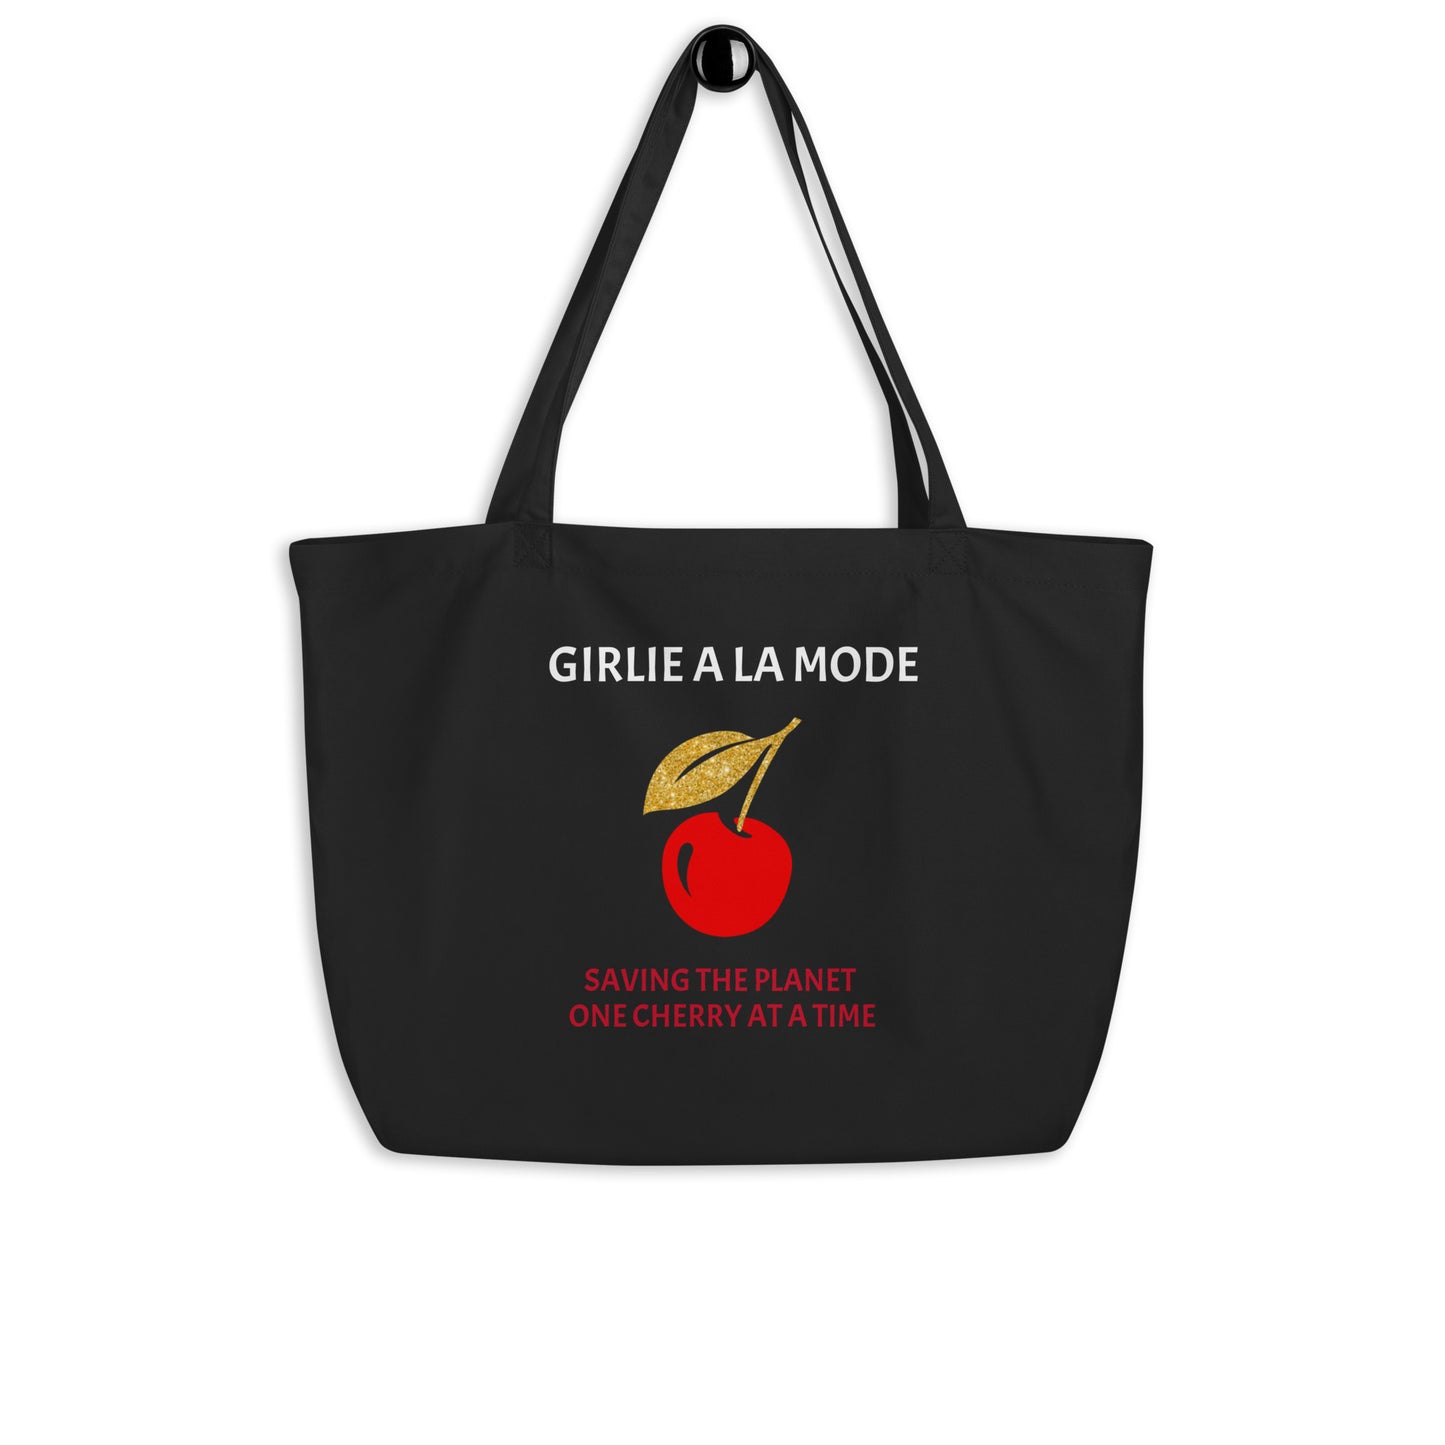 Large Organic Cherry Tote Bag